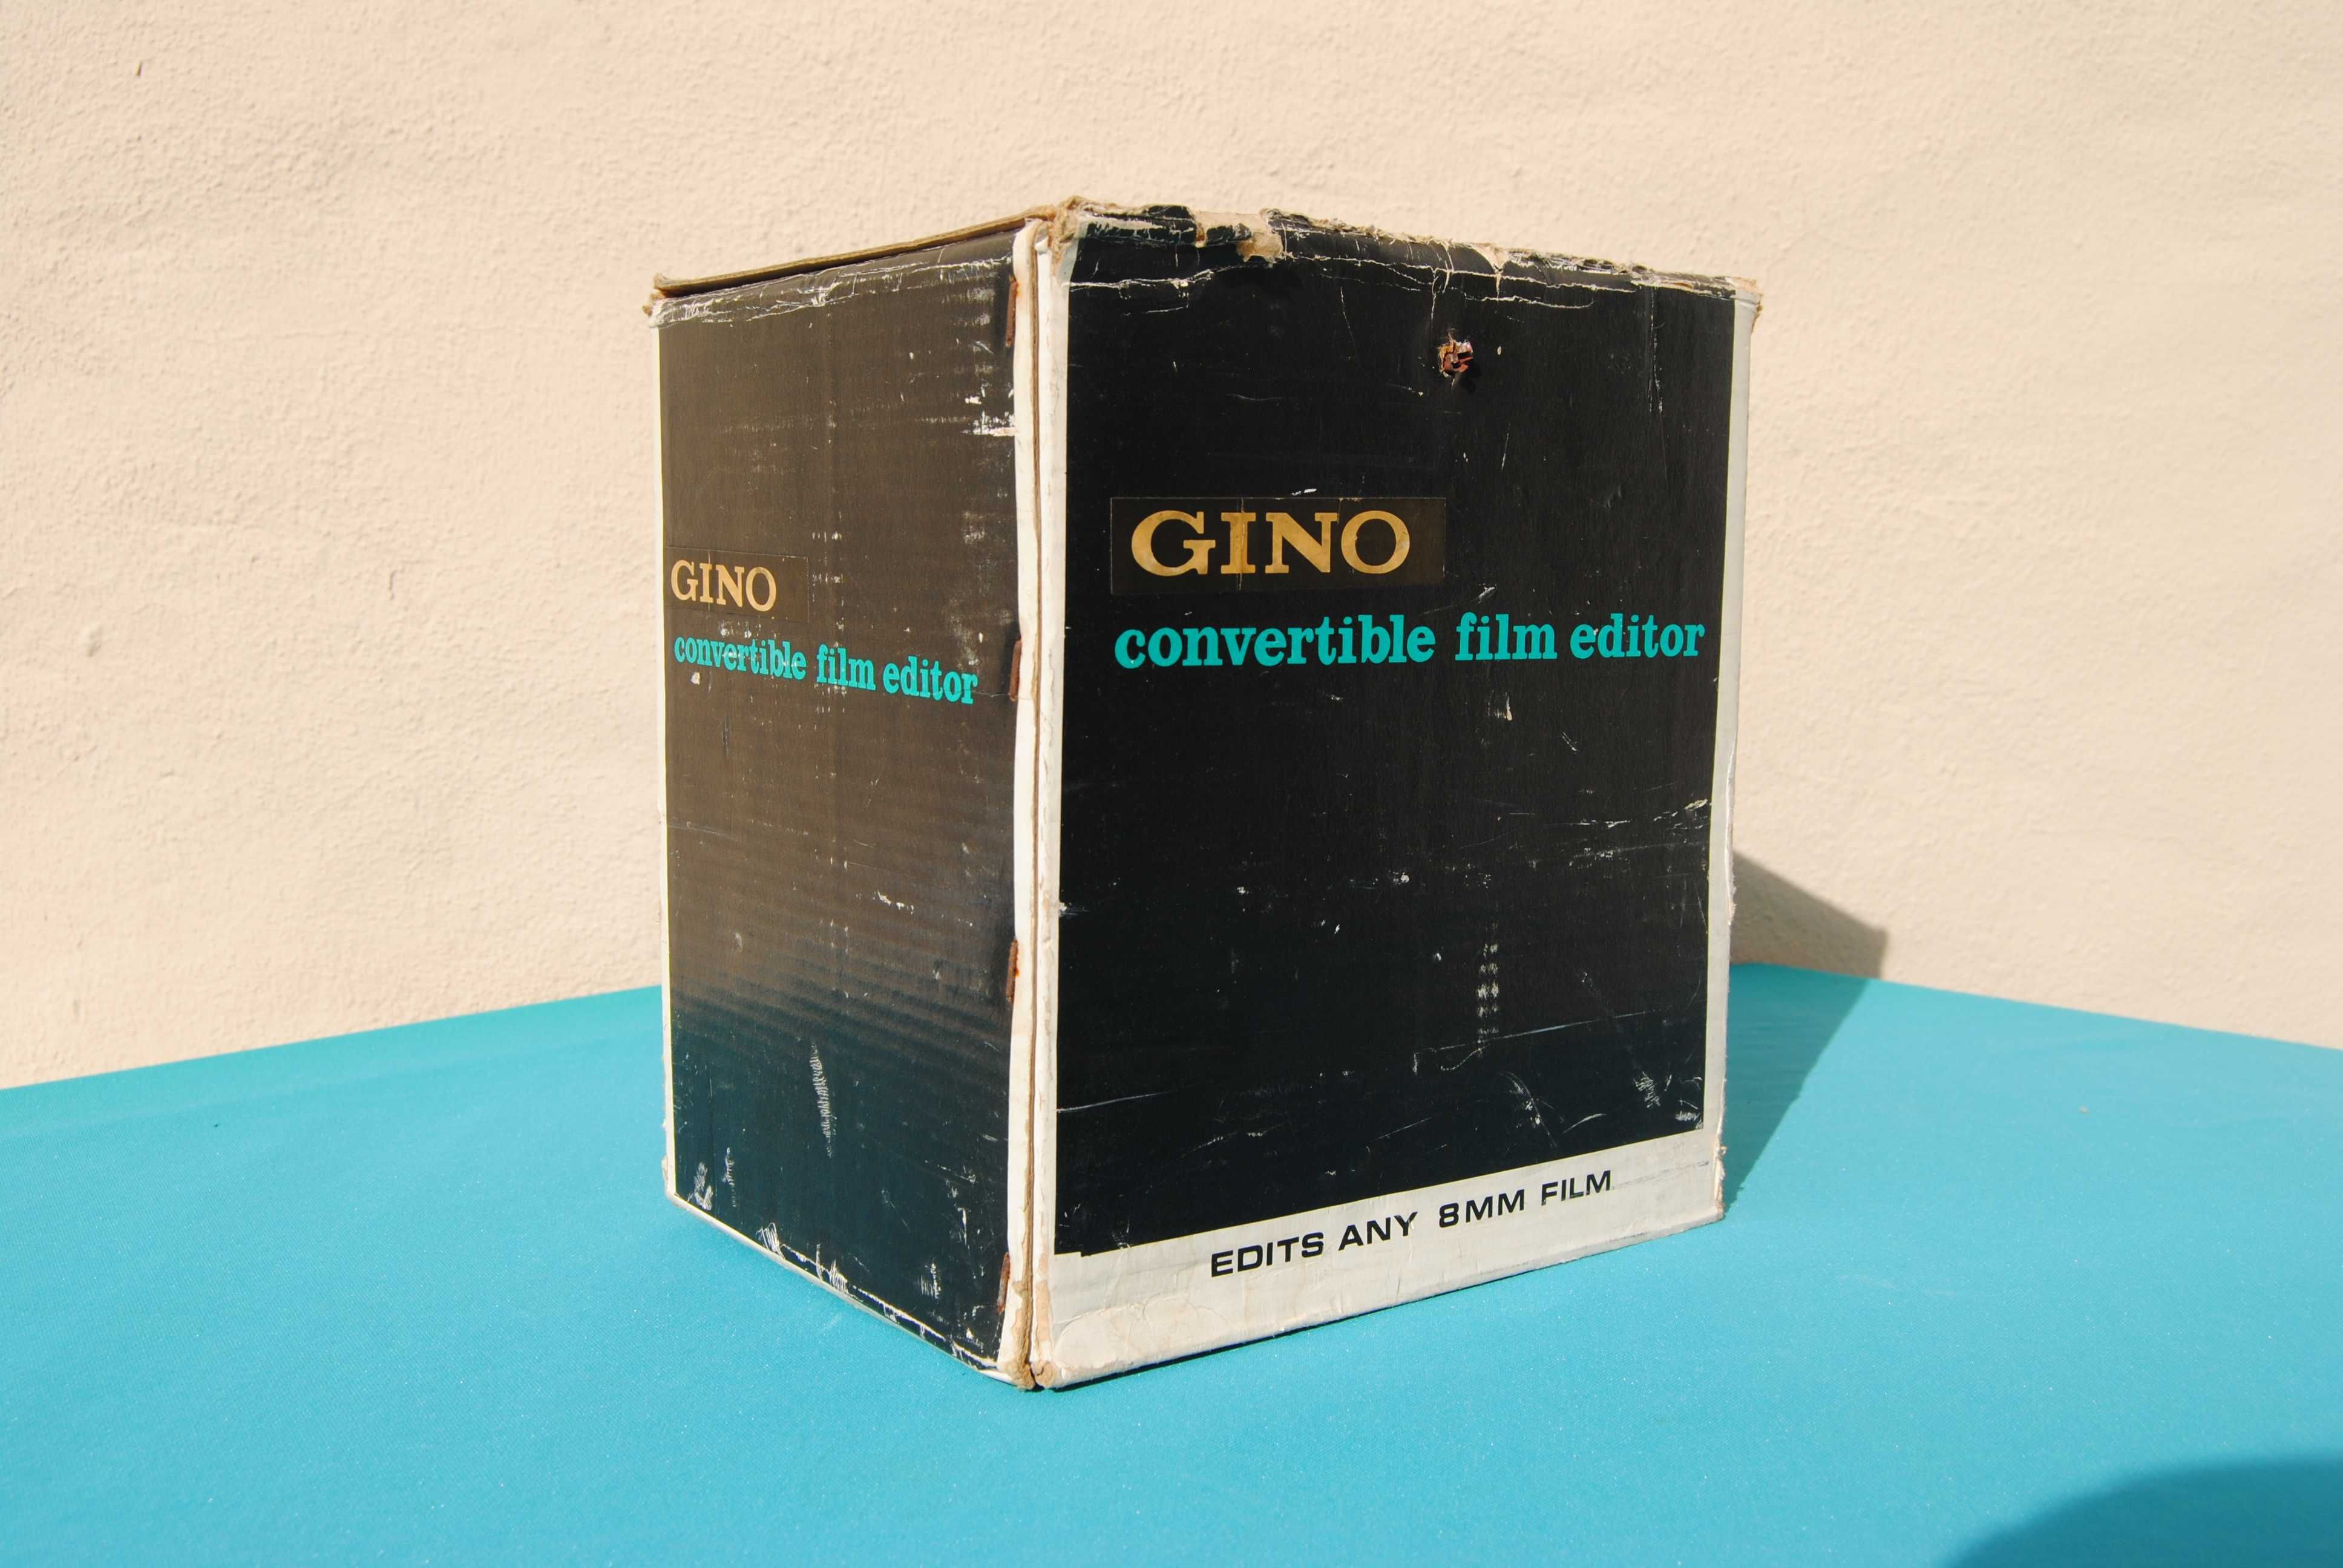 Gino convertible film editor "edits any 8mm film" na caixa - vintage